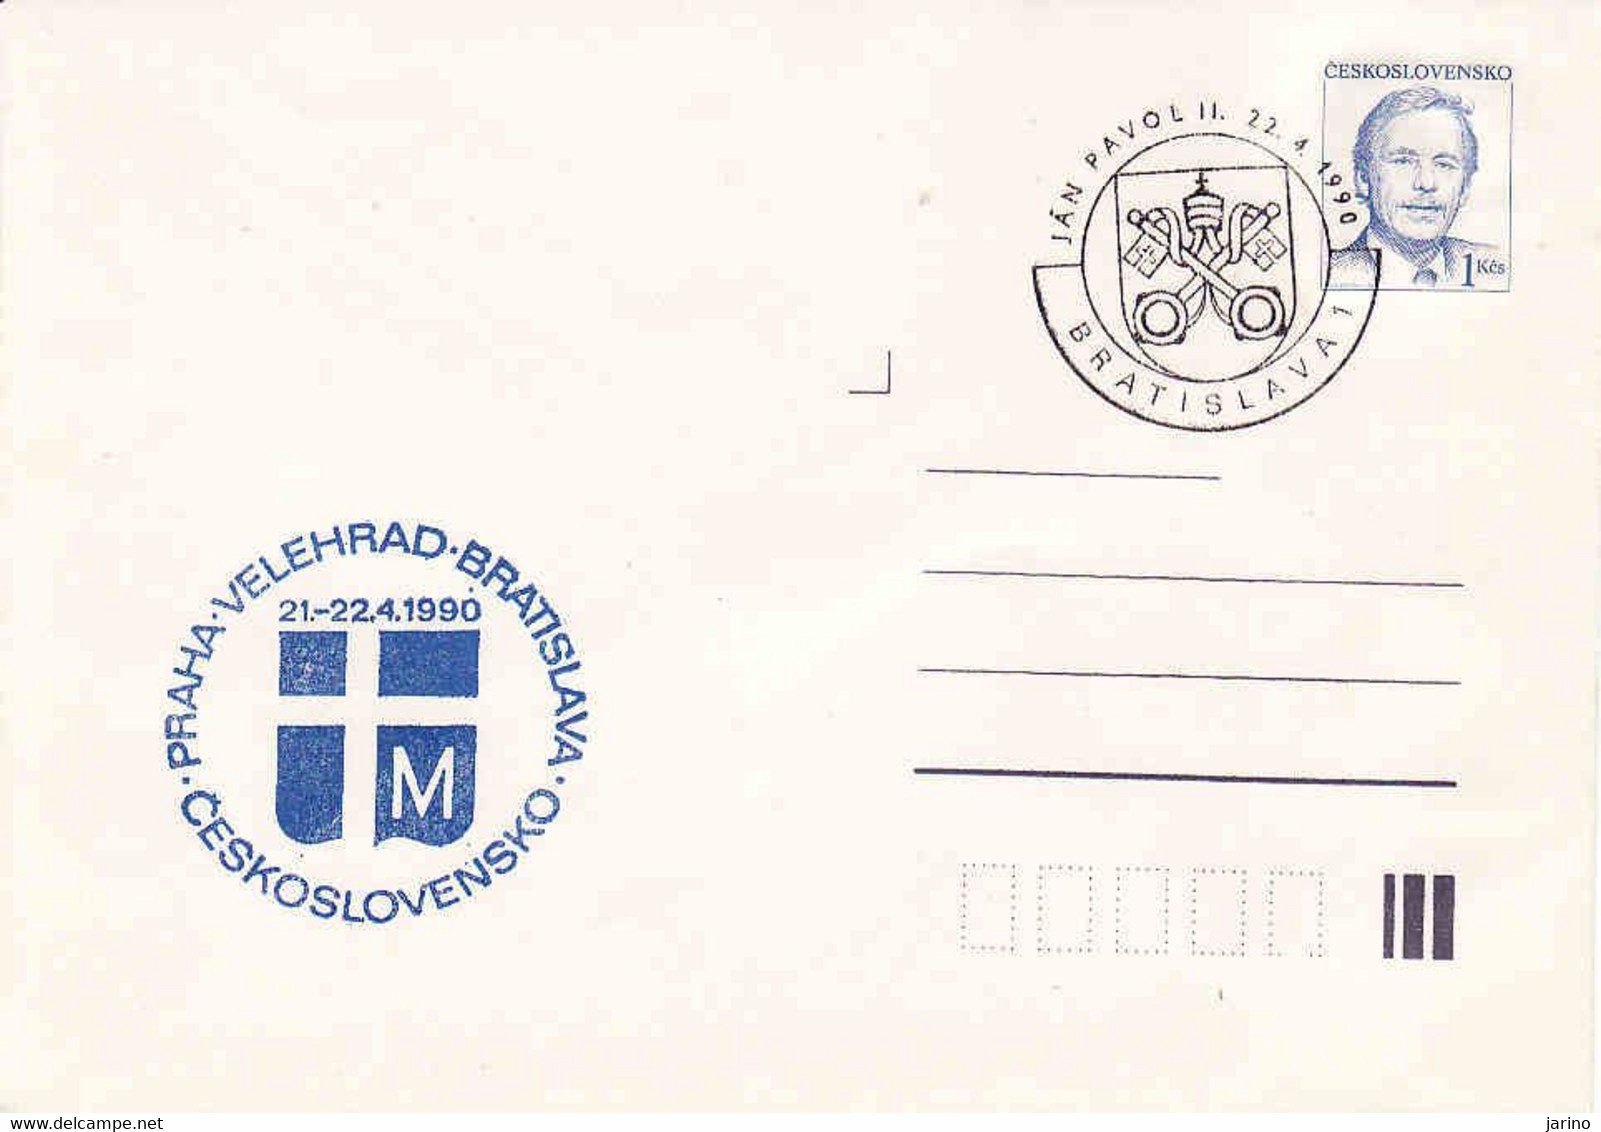 Czechoslovakia 1990, Praha - Velehrad, Bratislava, Visit John Pavul II 21. - 22.4 .1990 - Covers